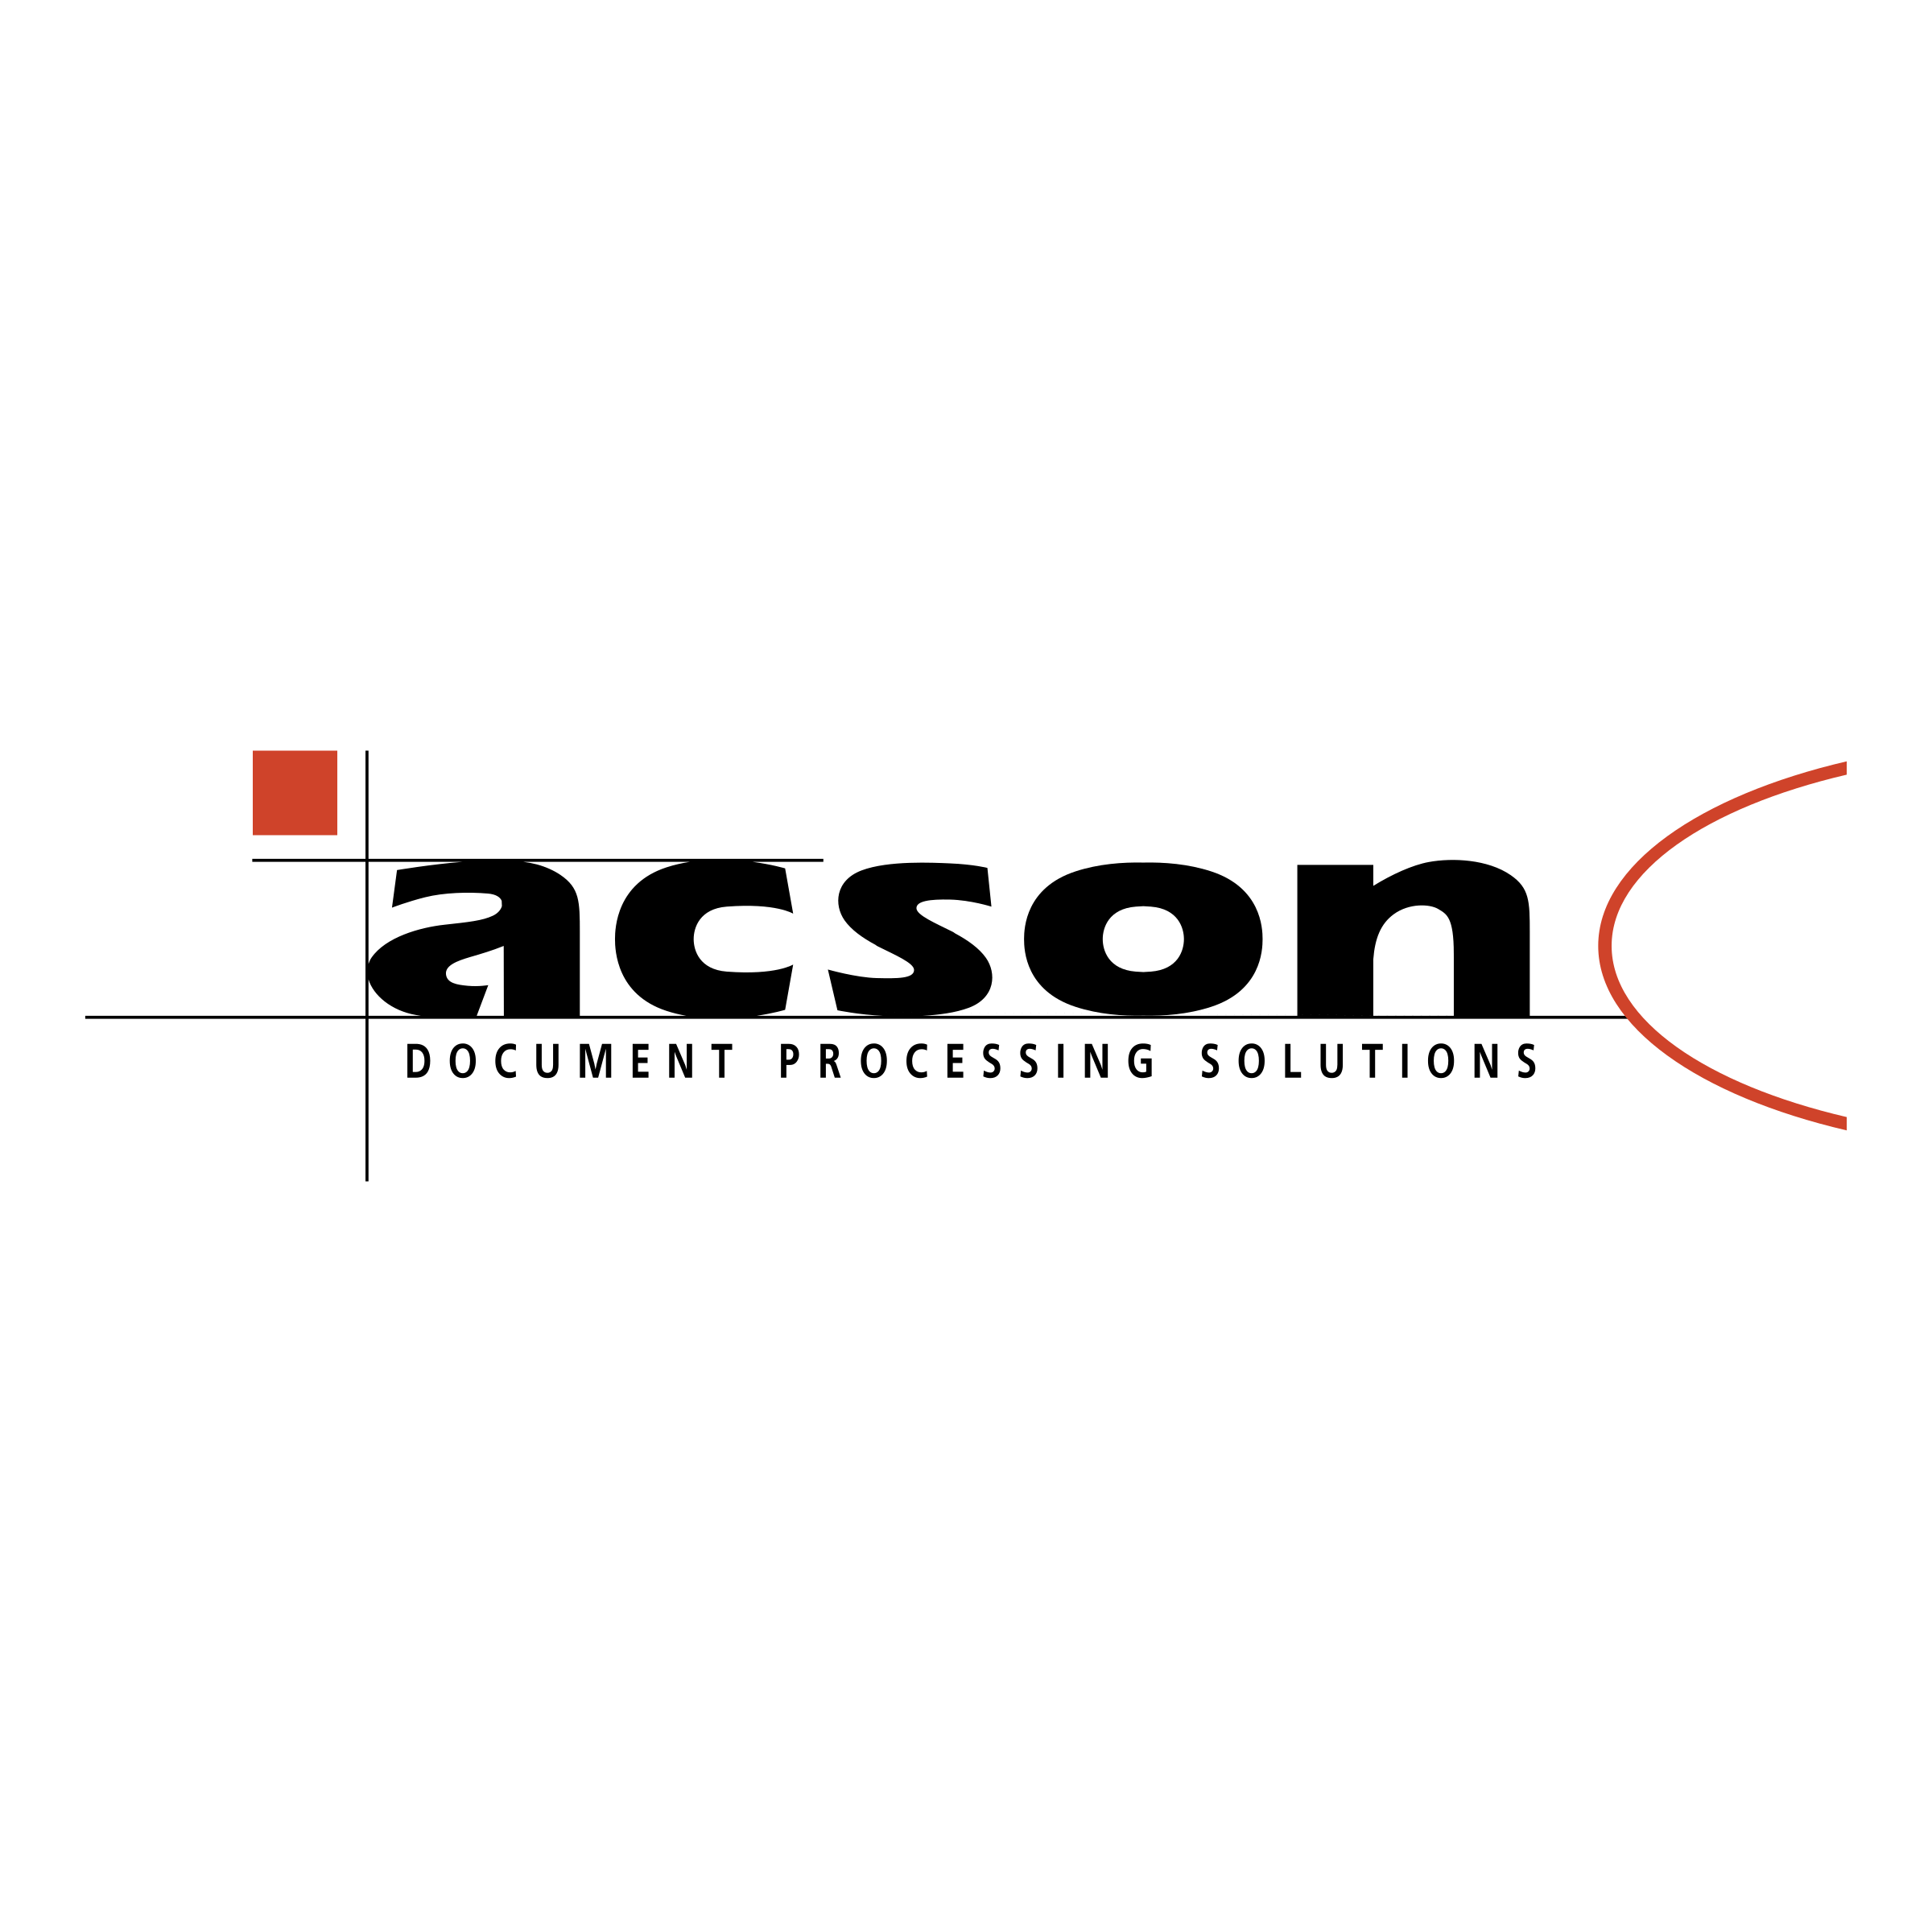 Acson Logo - Acson Logo PNG Transparent & SVG Vector - Freebie Supply